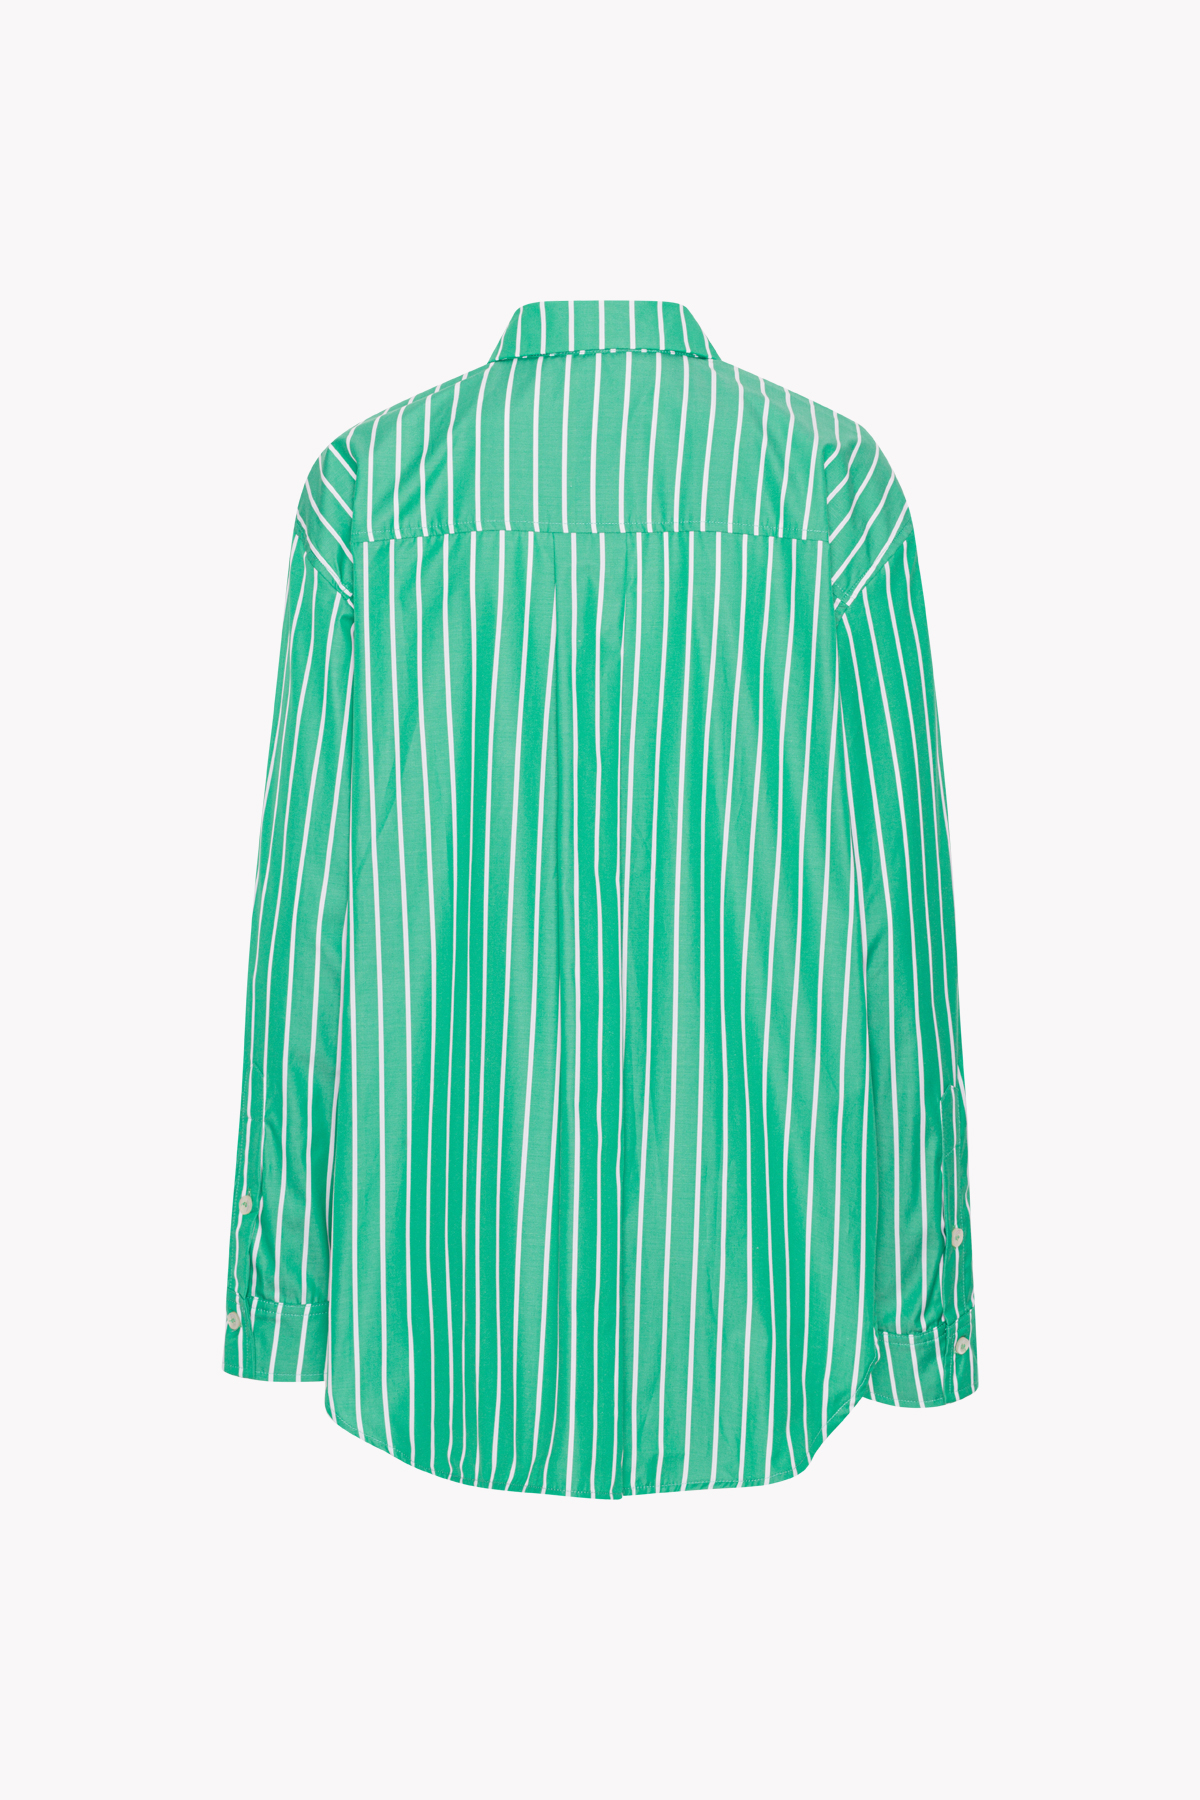 Iblamelulu Edward shirt green stripe